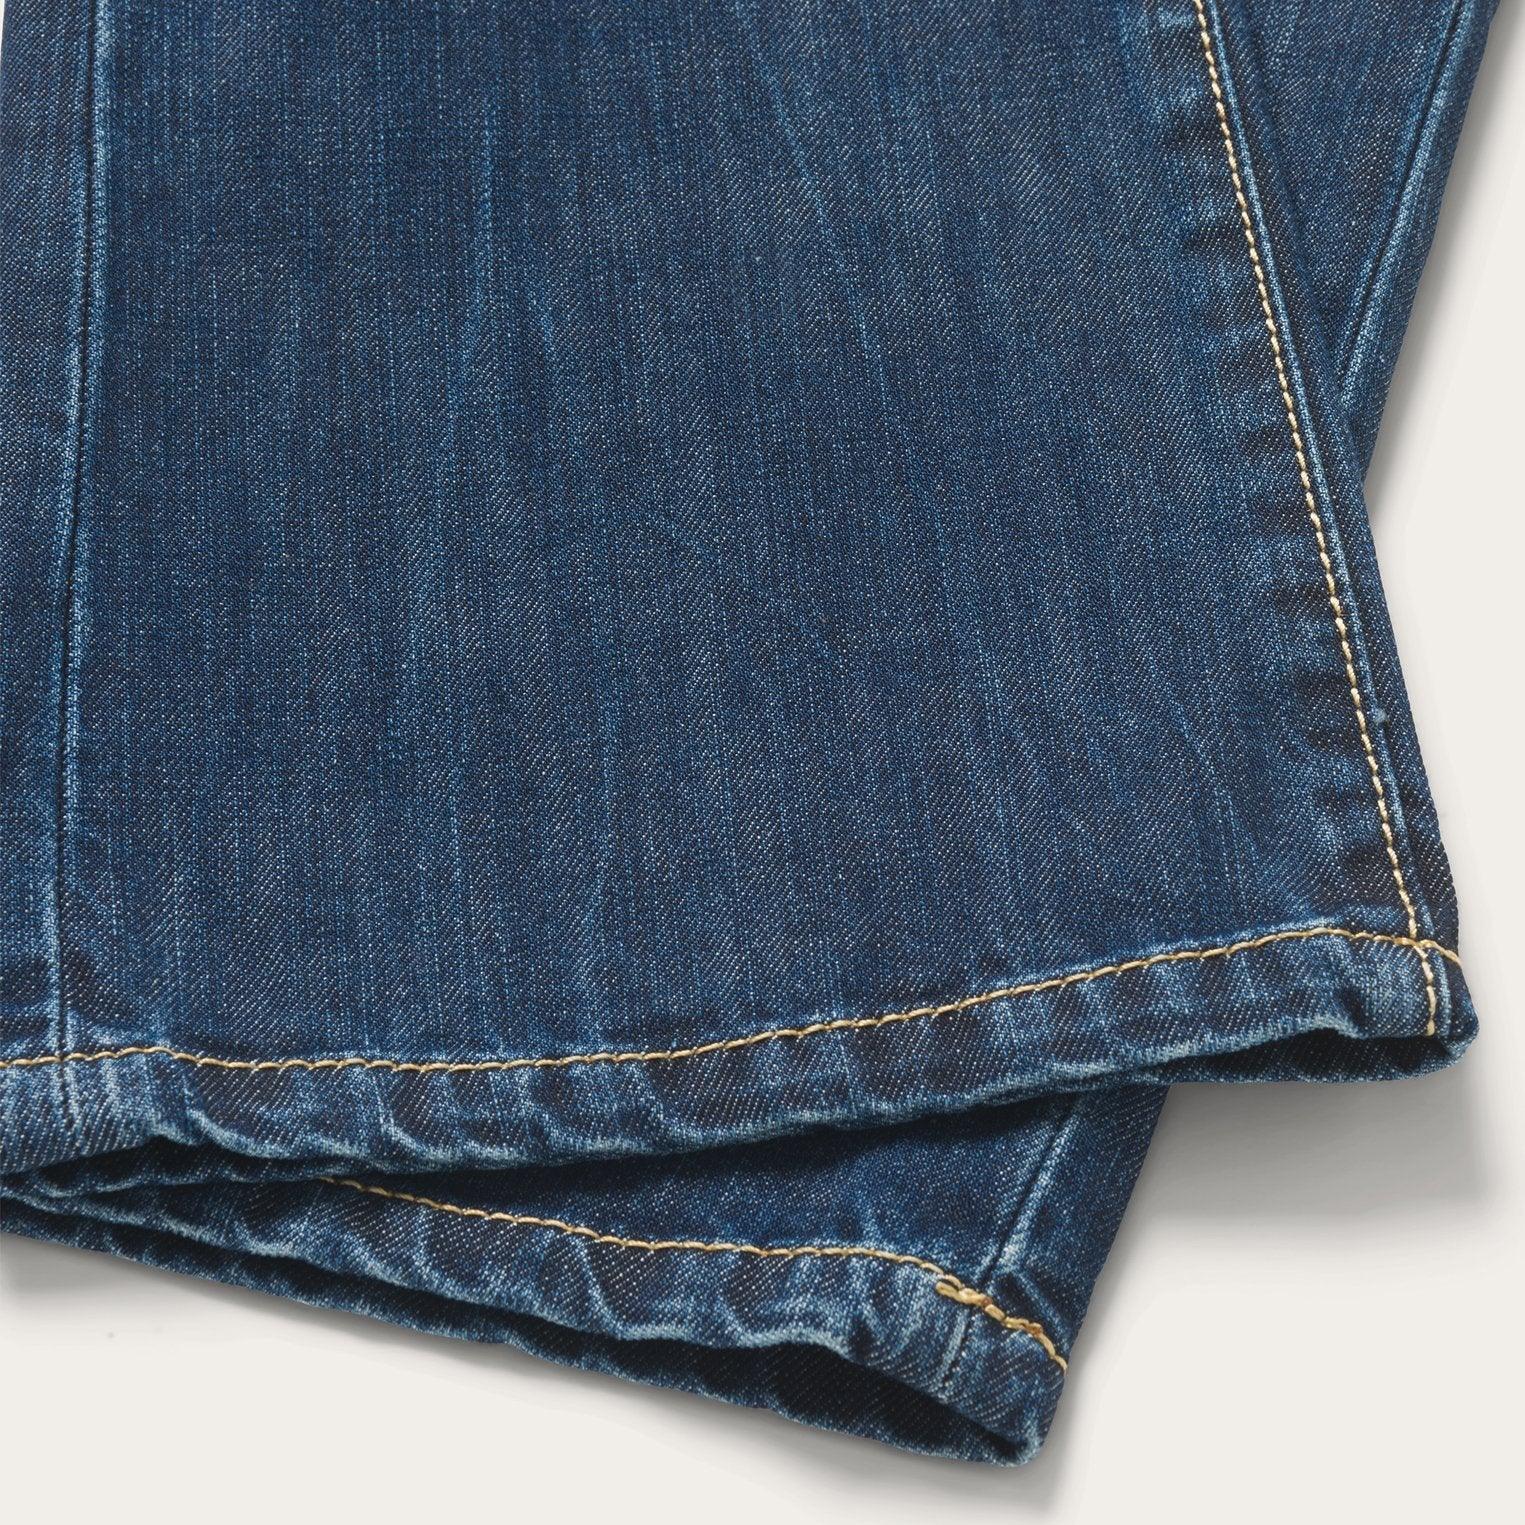 Stetson 1014 Fit Semi-Destructed Wash Jeans - Flyclothing LLC